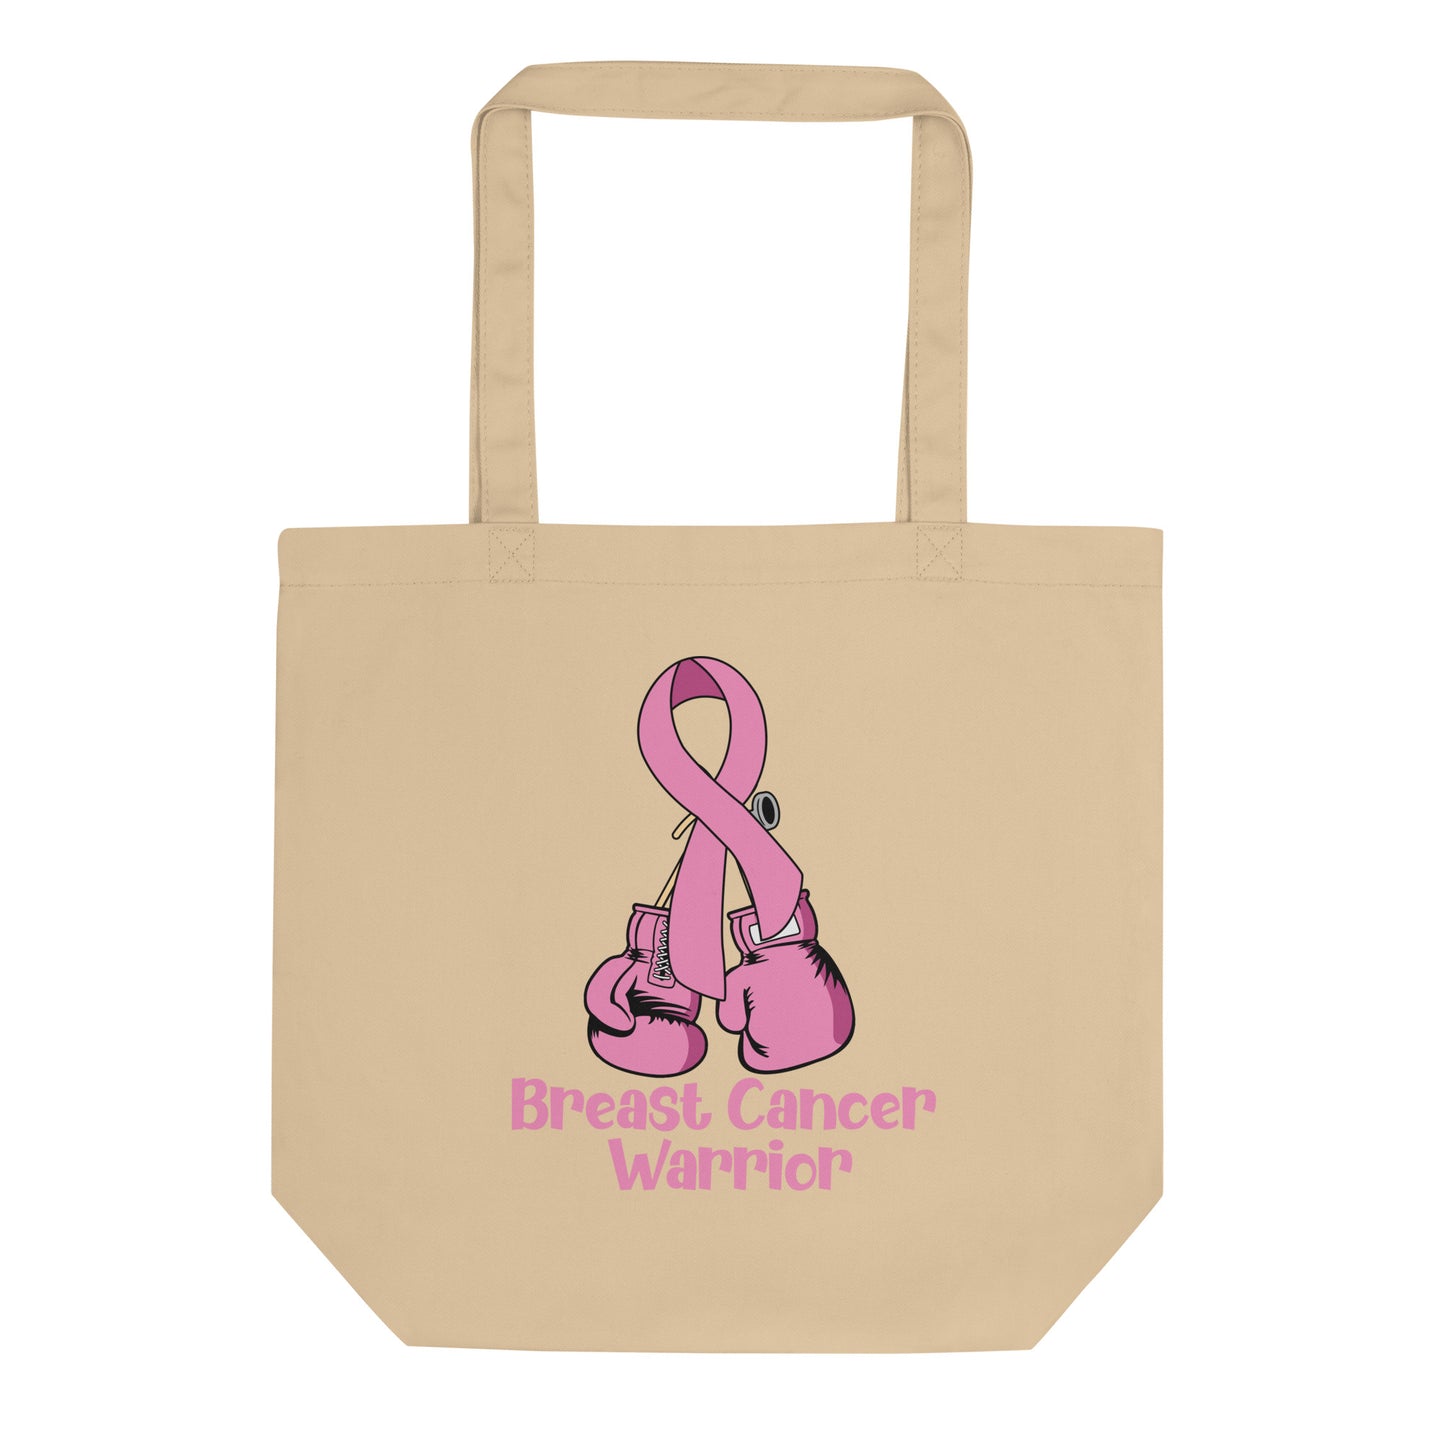 Breast Cancer Warrior Eco Tote Bag